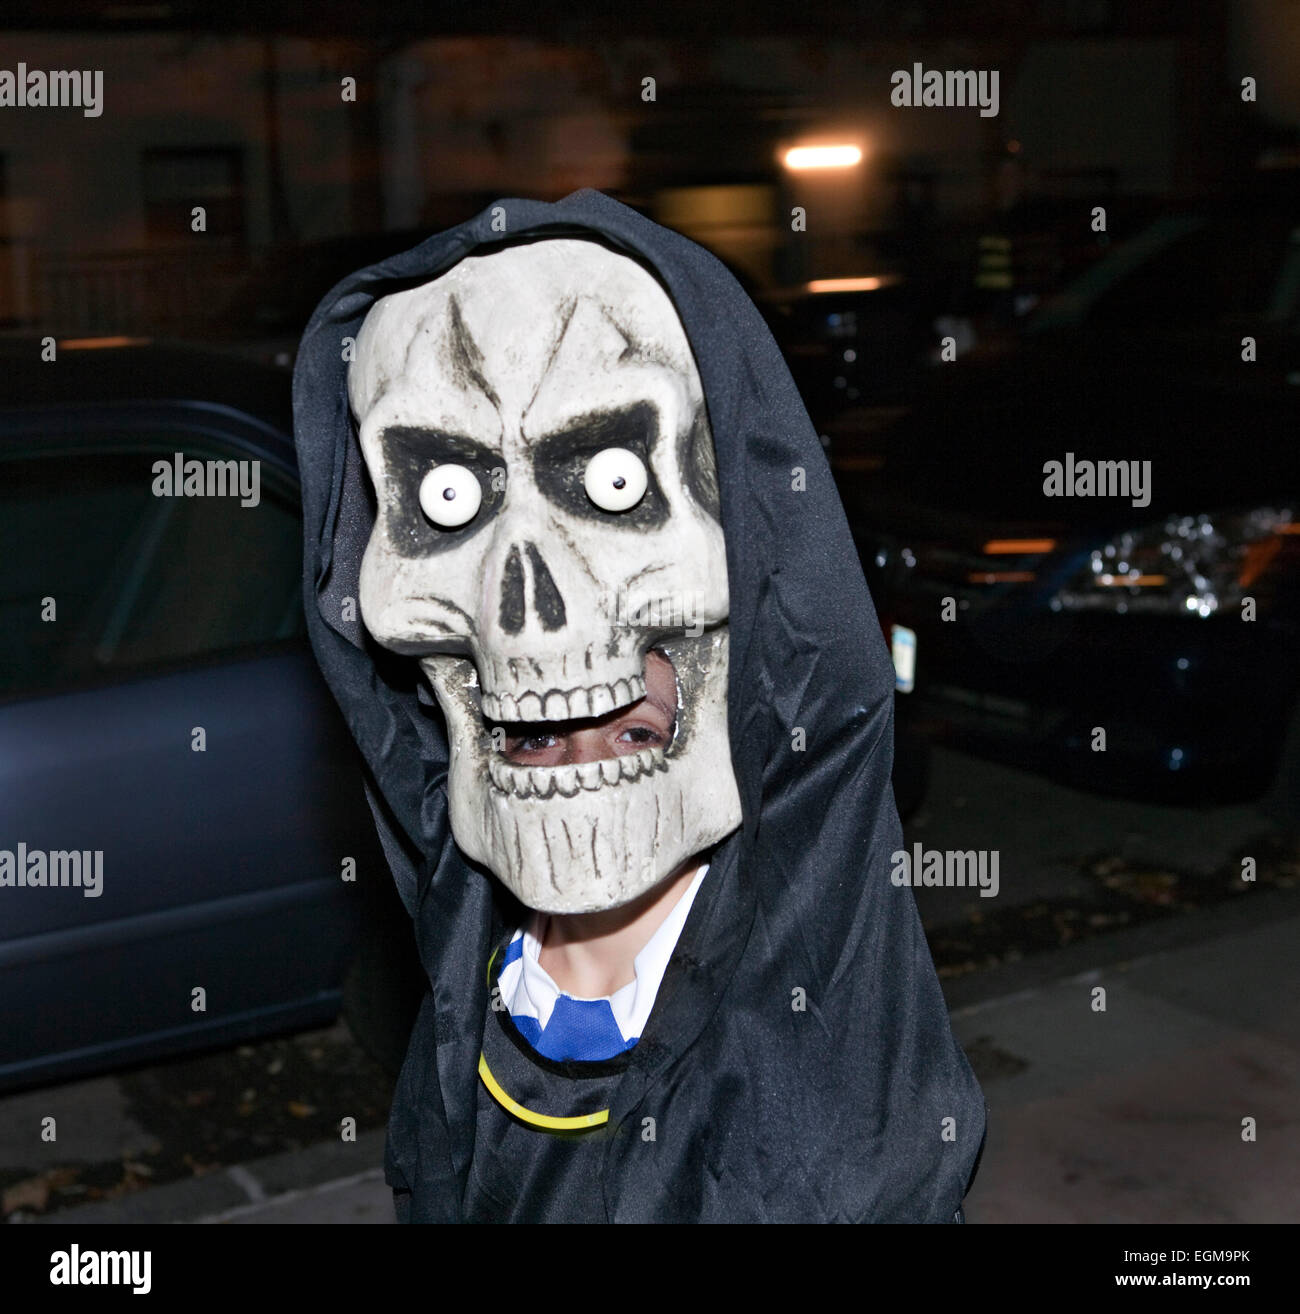 Giant Skull mask Trick or Treating Halloween Night Stock Photo